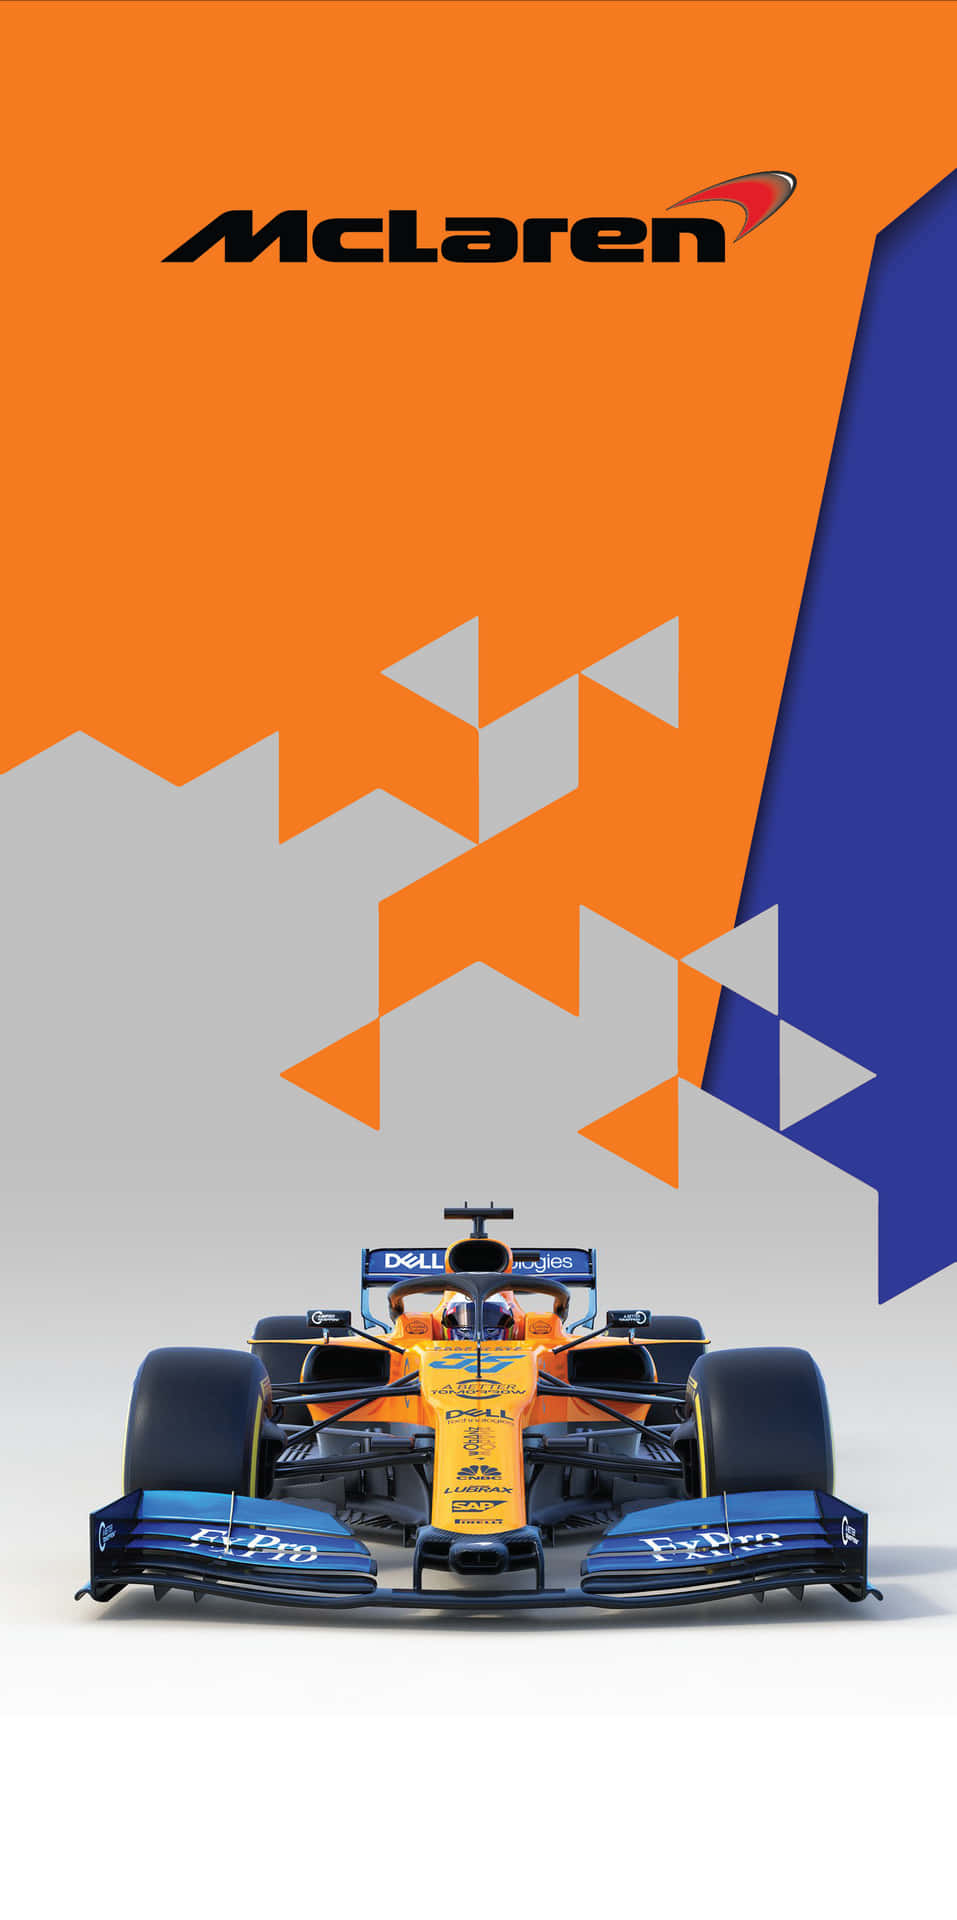 100+] Mclaren Formula 1 Wallpapers | Wallpapers.com